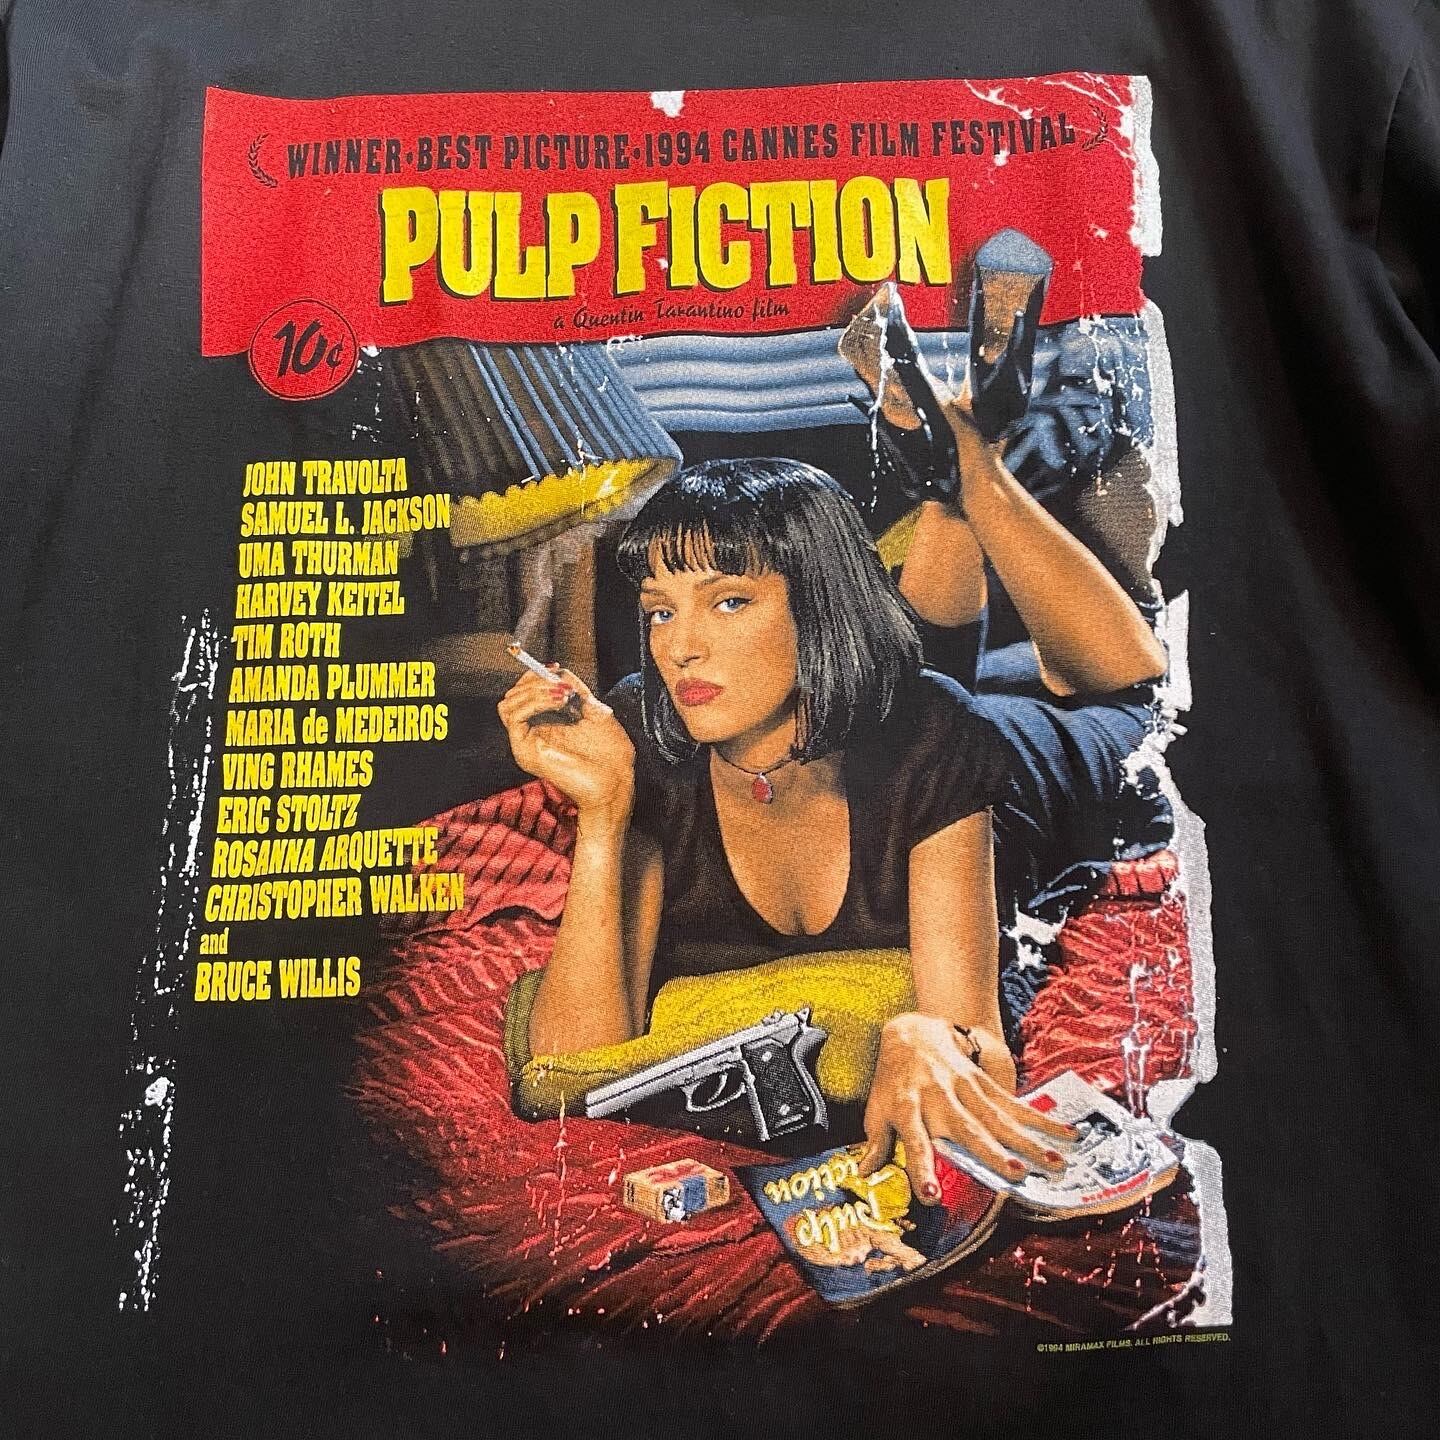 90s pulp fiction tシャツ